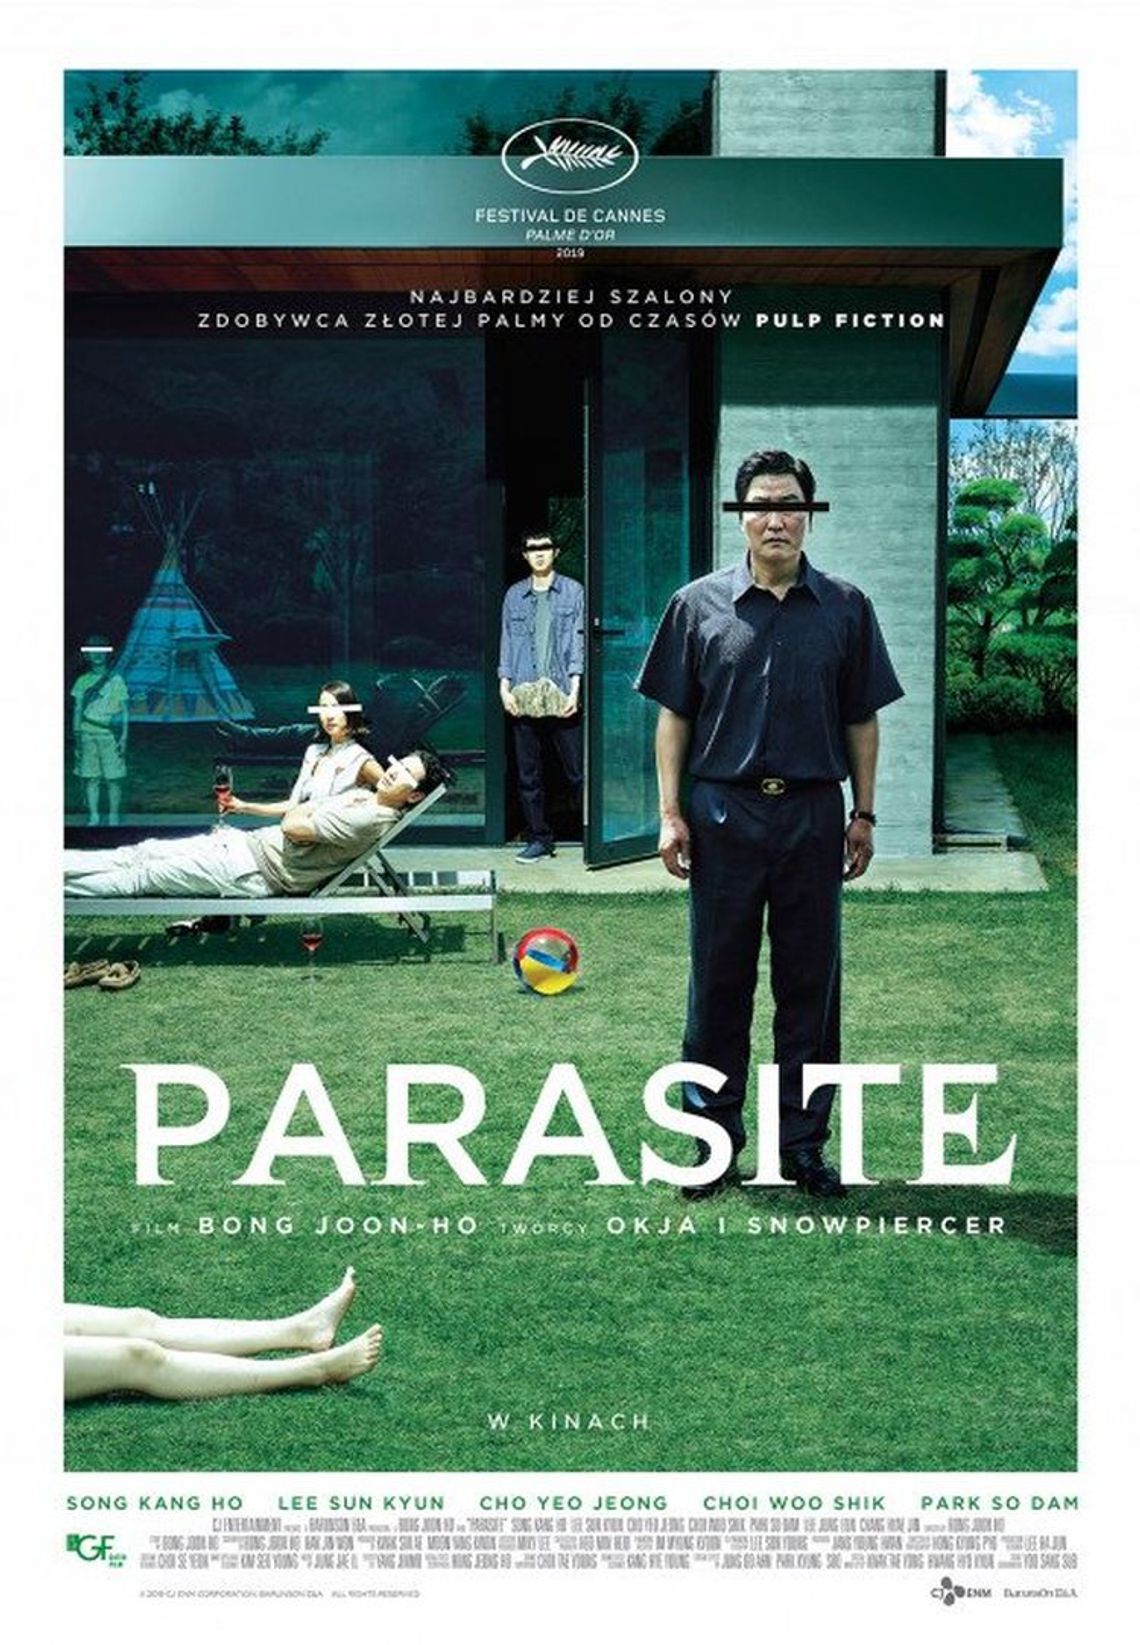 KINO W PARKU – projekcja filmu „Parasite” reż. Bong Joon-ho.